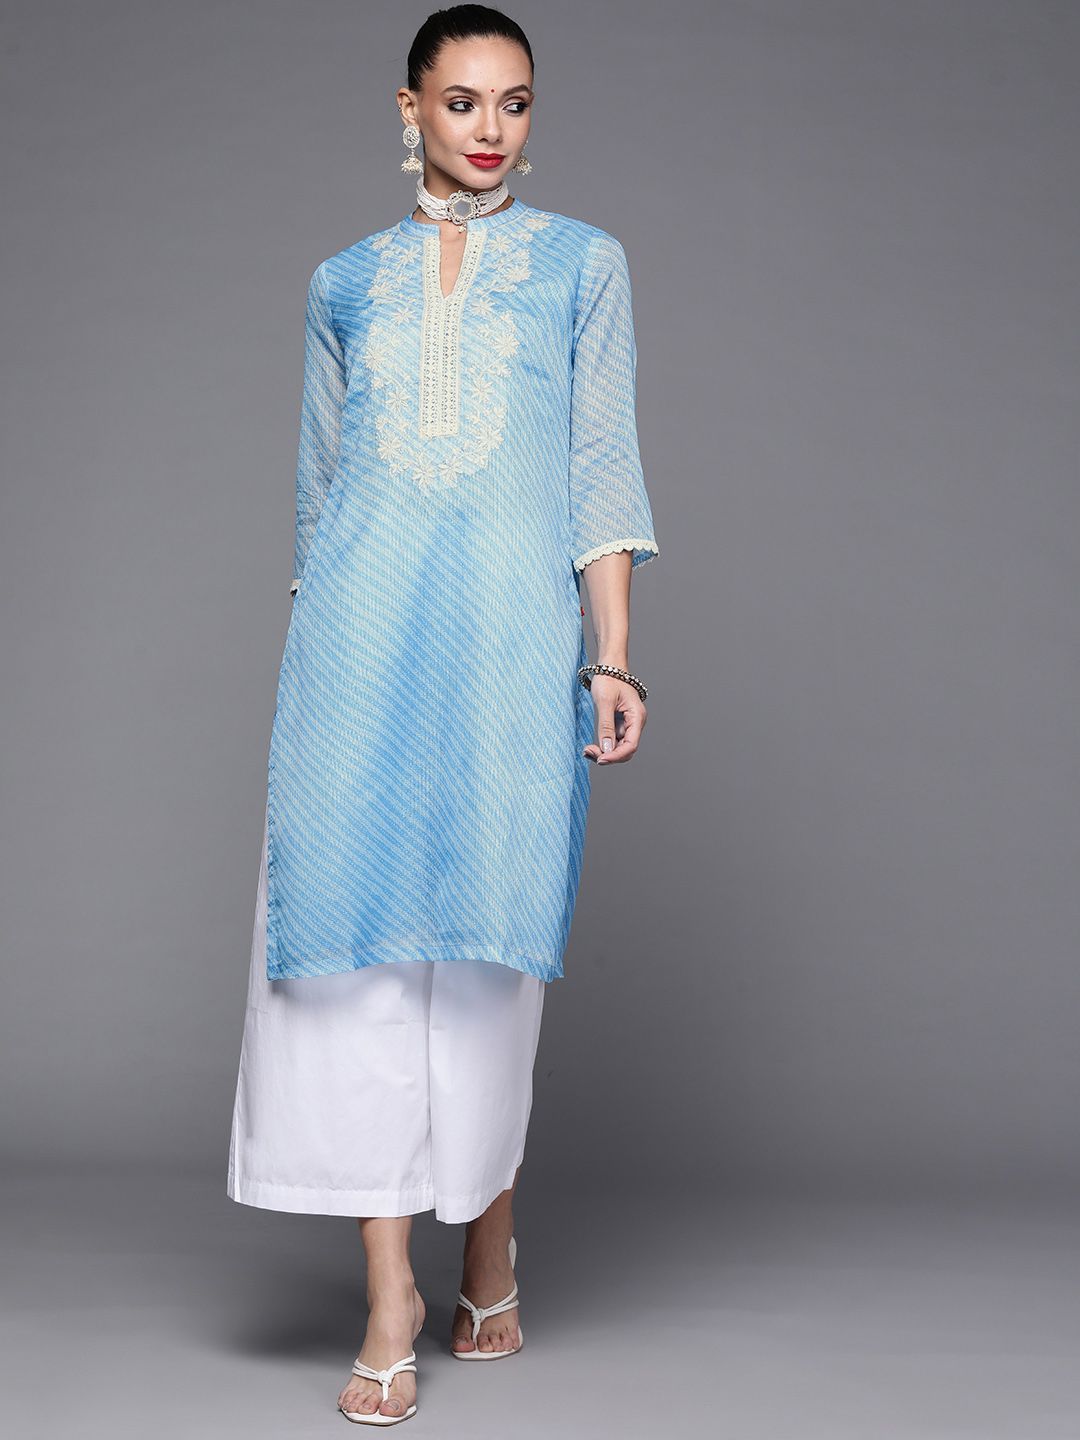 Biba Women Blue & White Striped Lace Inserts Embroidered Yoke Design A-Line Kurta Price in India